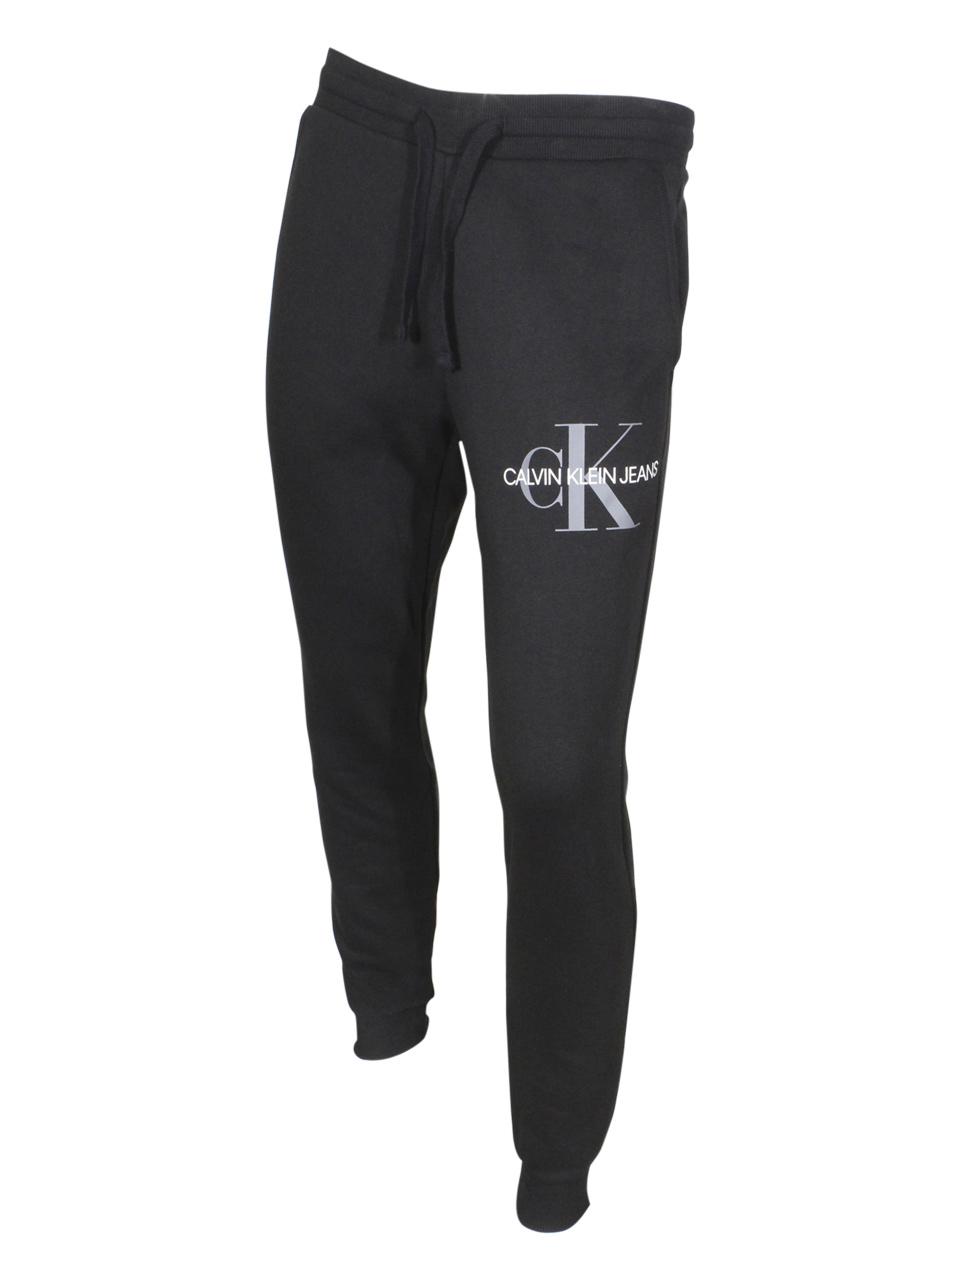 Calvin Klein Sweatpants for Men - Shop Now on FARFETCH